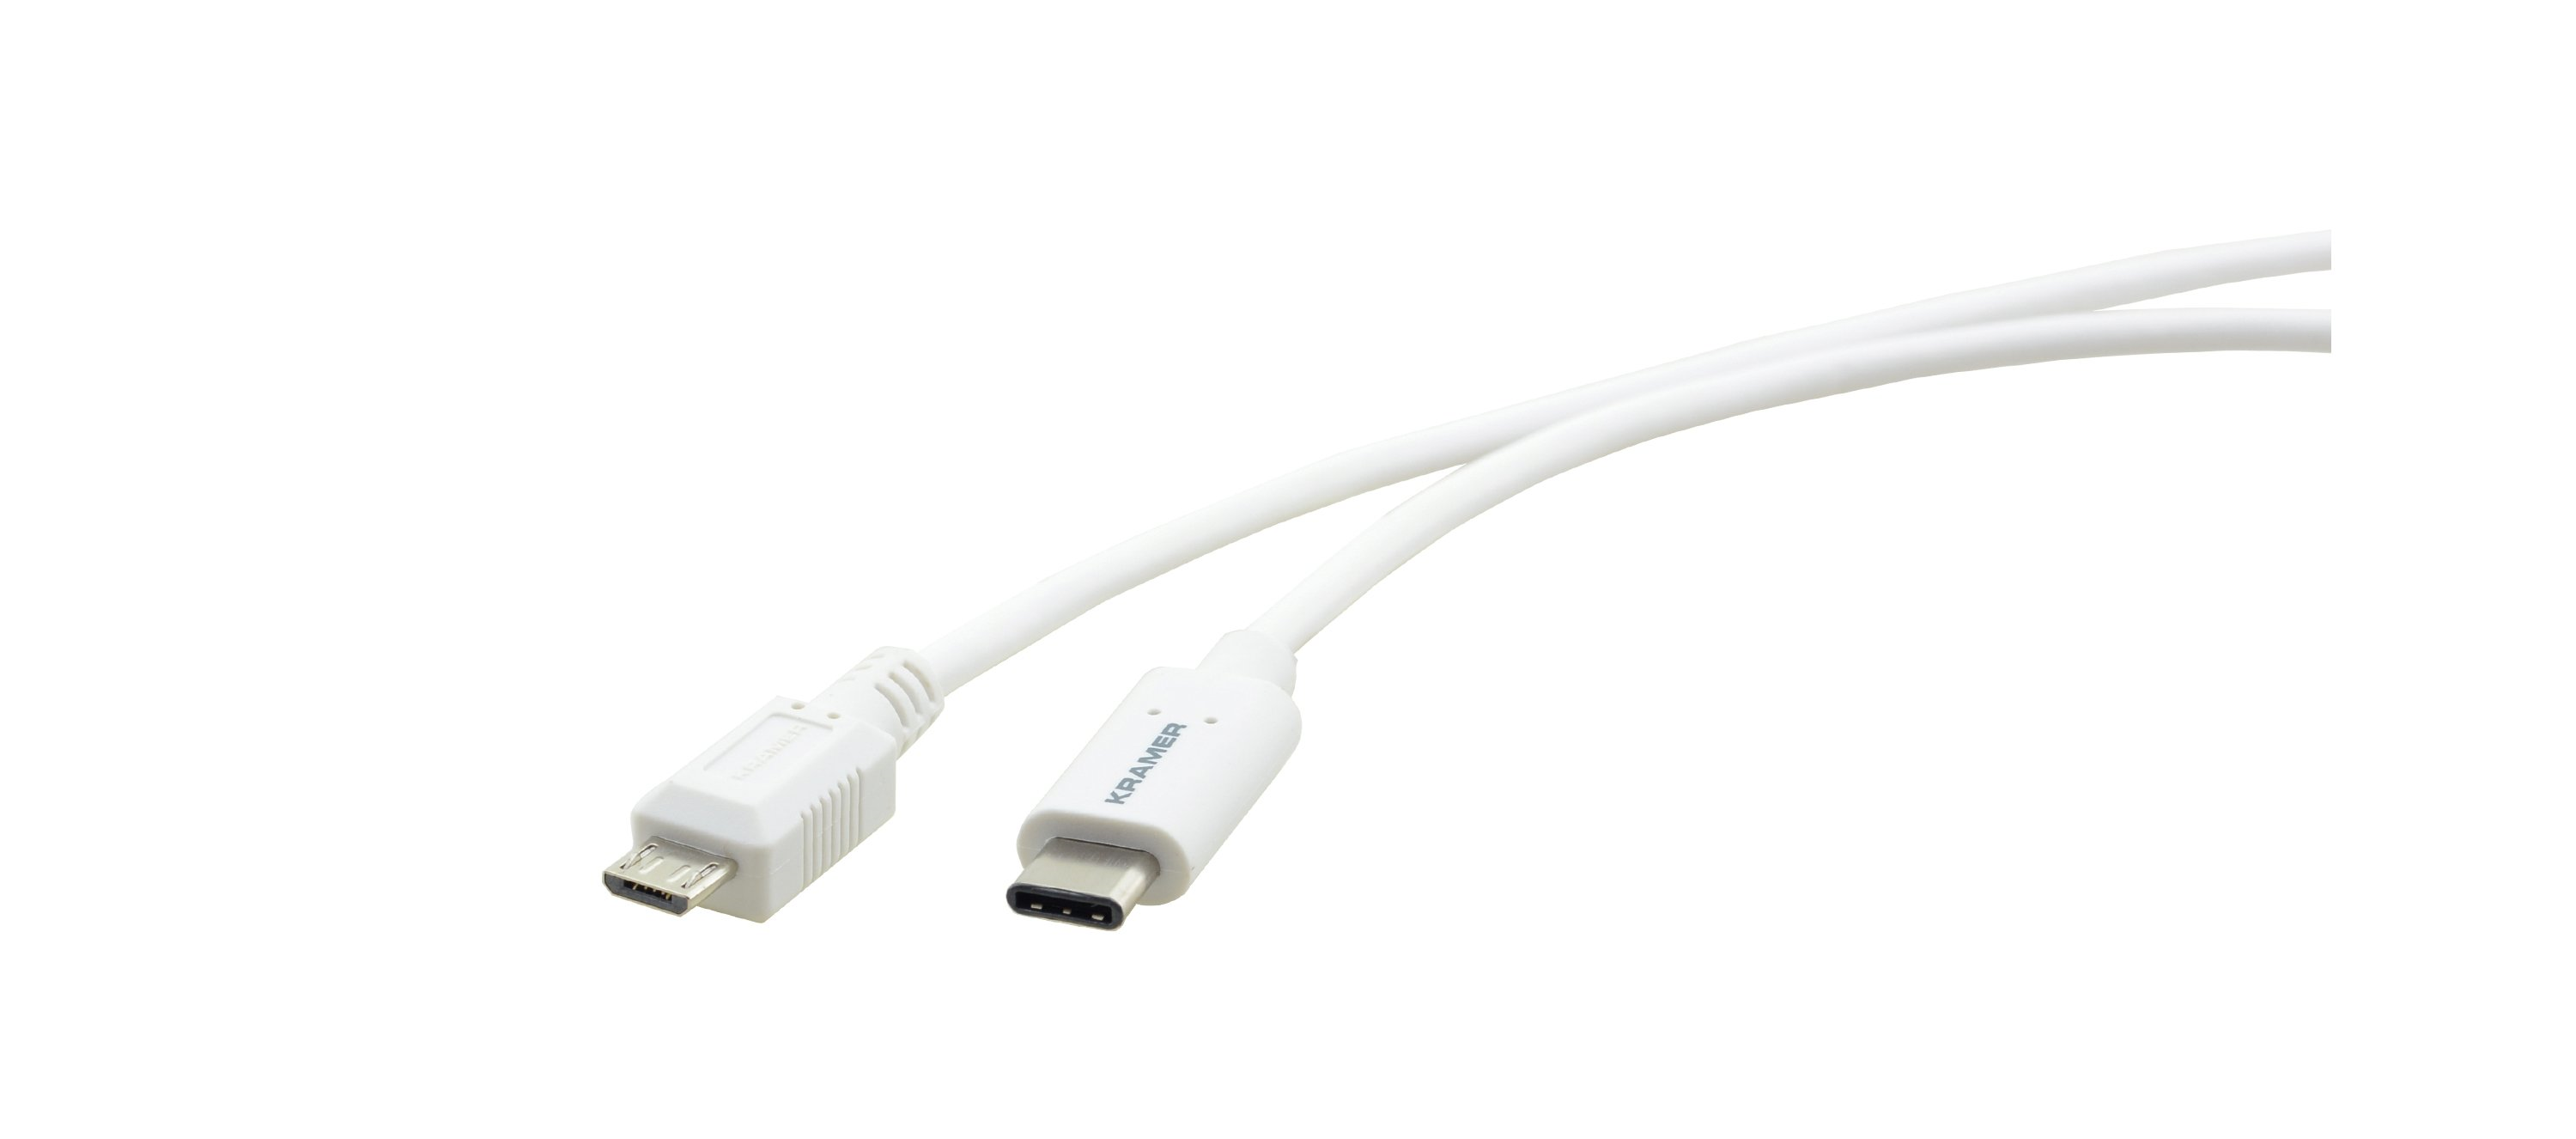 C-USB/CMicroB-6 USB 2.0 C(M) to MicroB(M) Cable-6ft